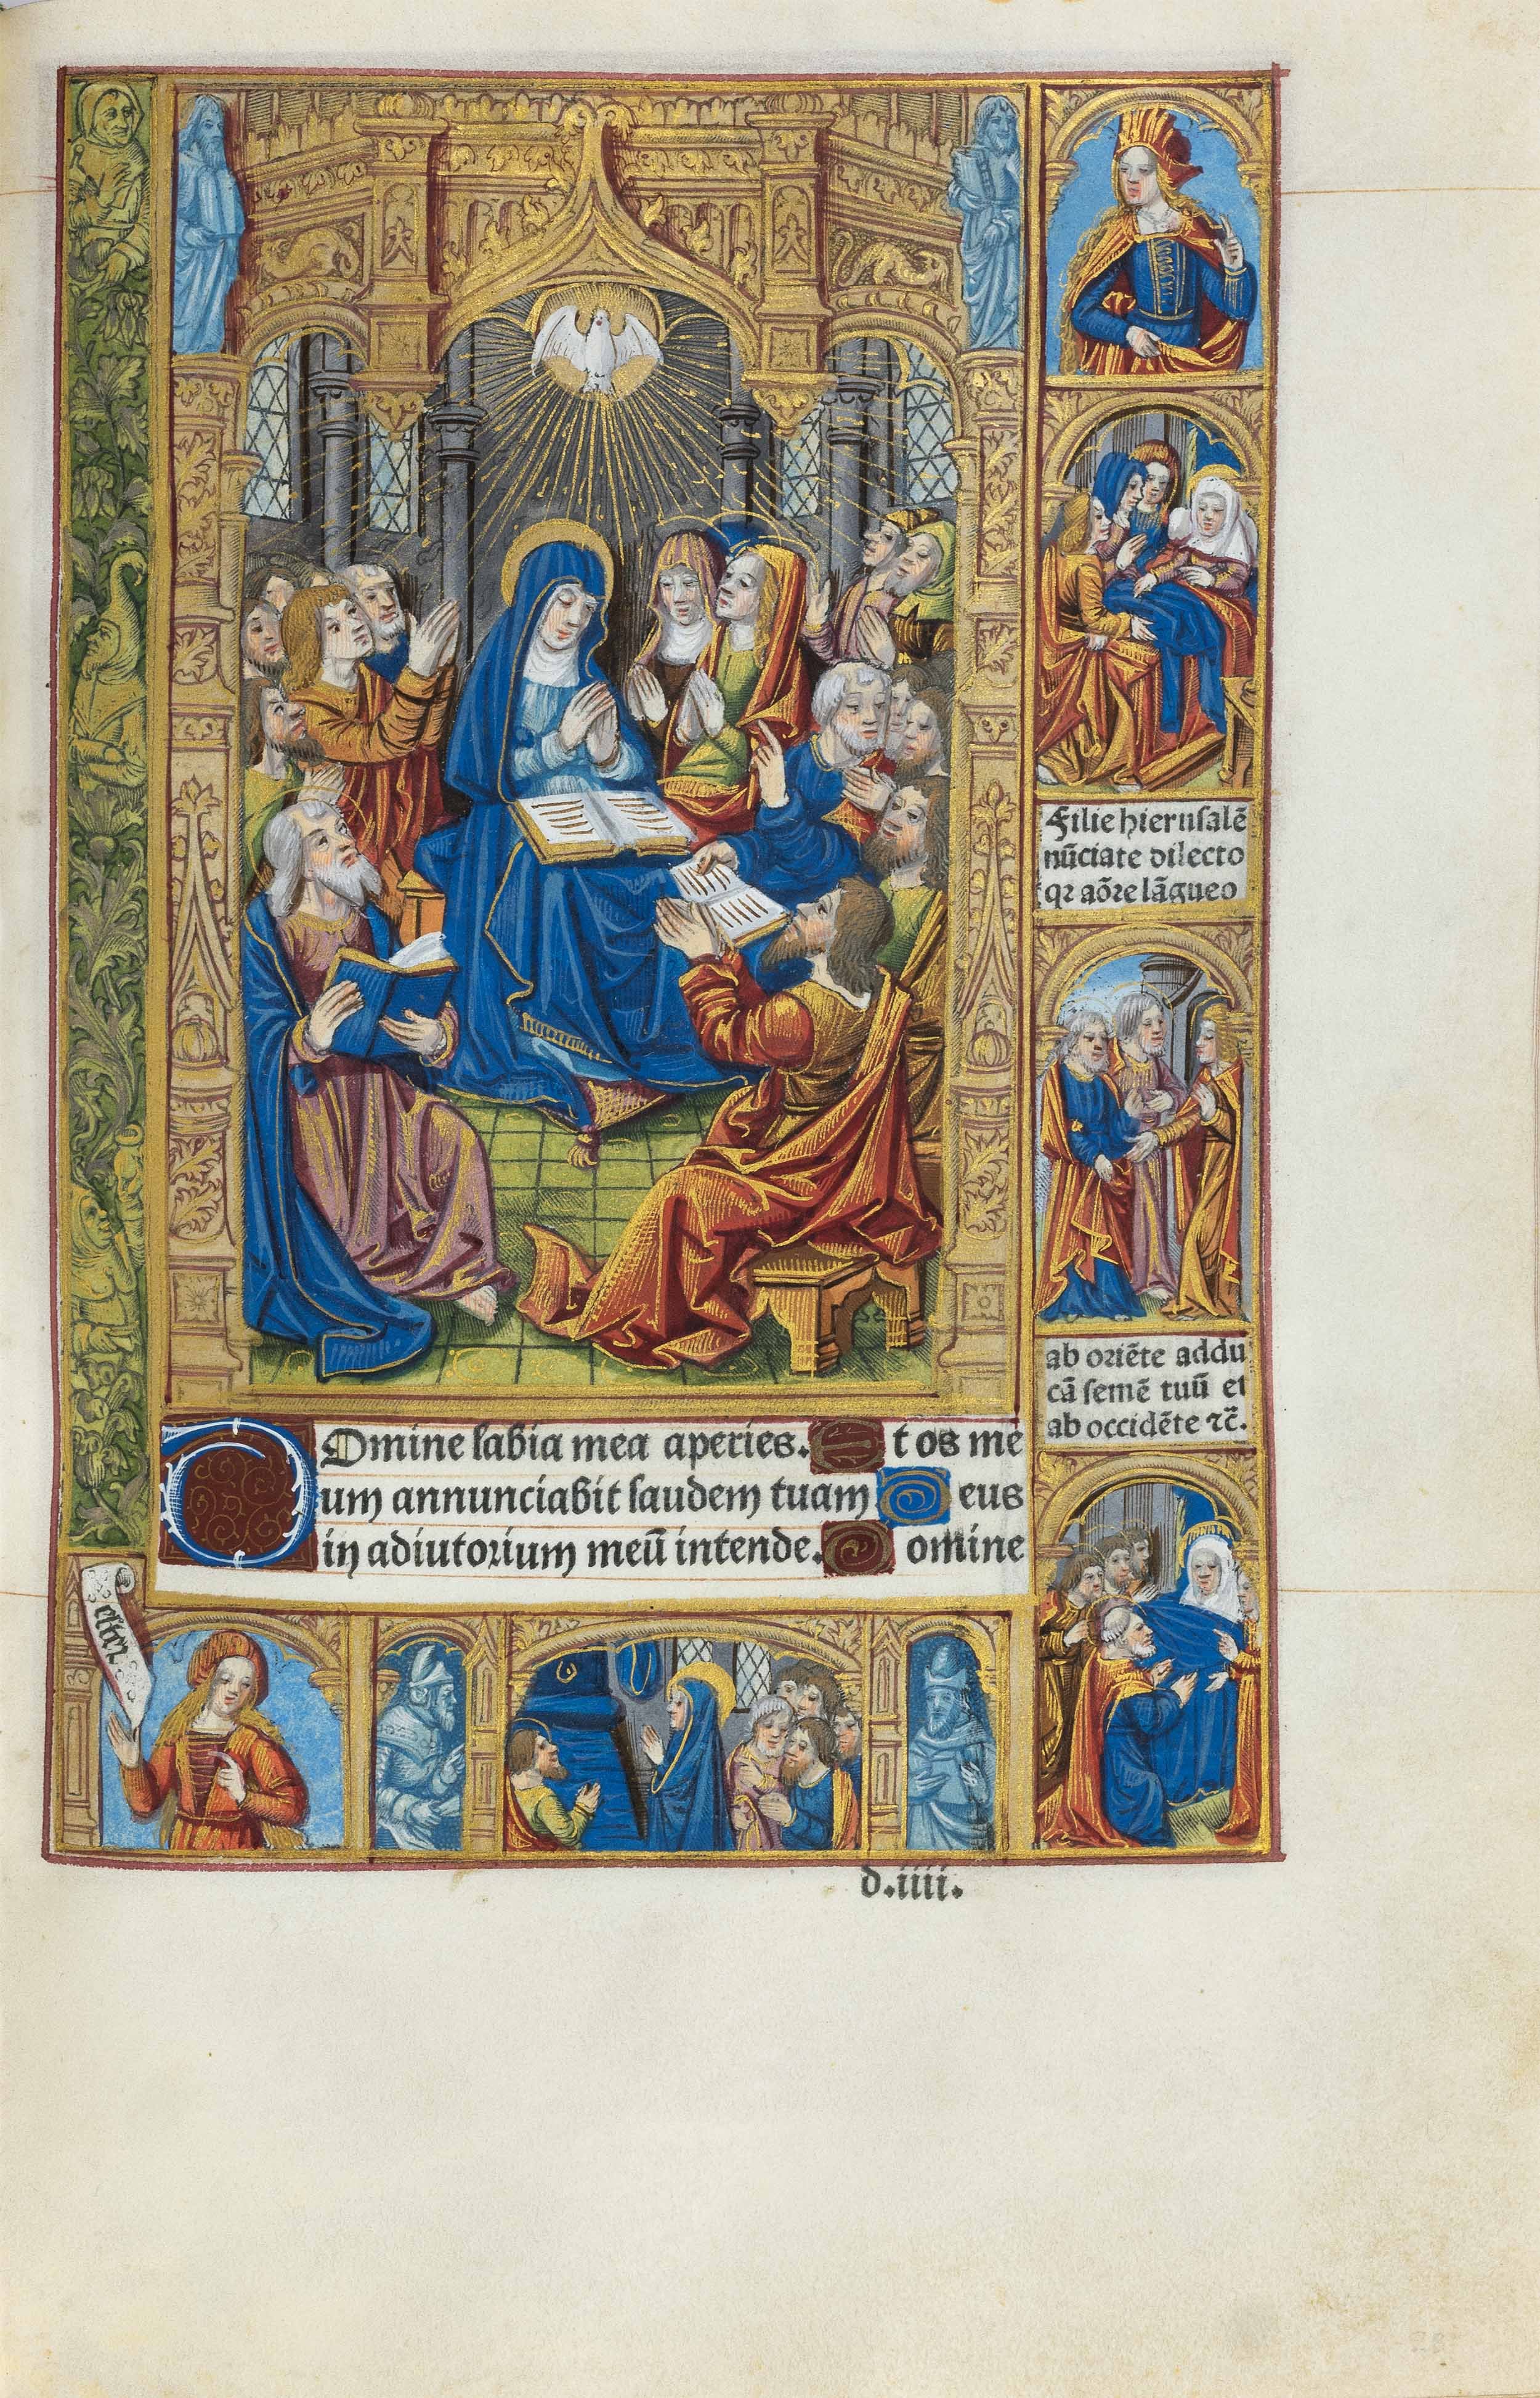 horae-bmv-16.9.1498-printed-book-of-hours-pigouchet-vostre-calixto crotus-illuminated-vellum-doheny-arcana-29.jpg